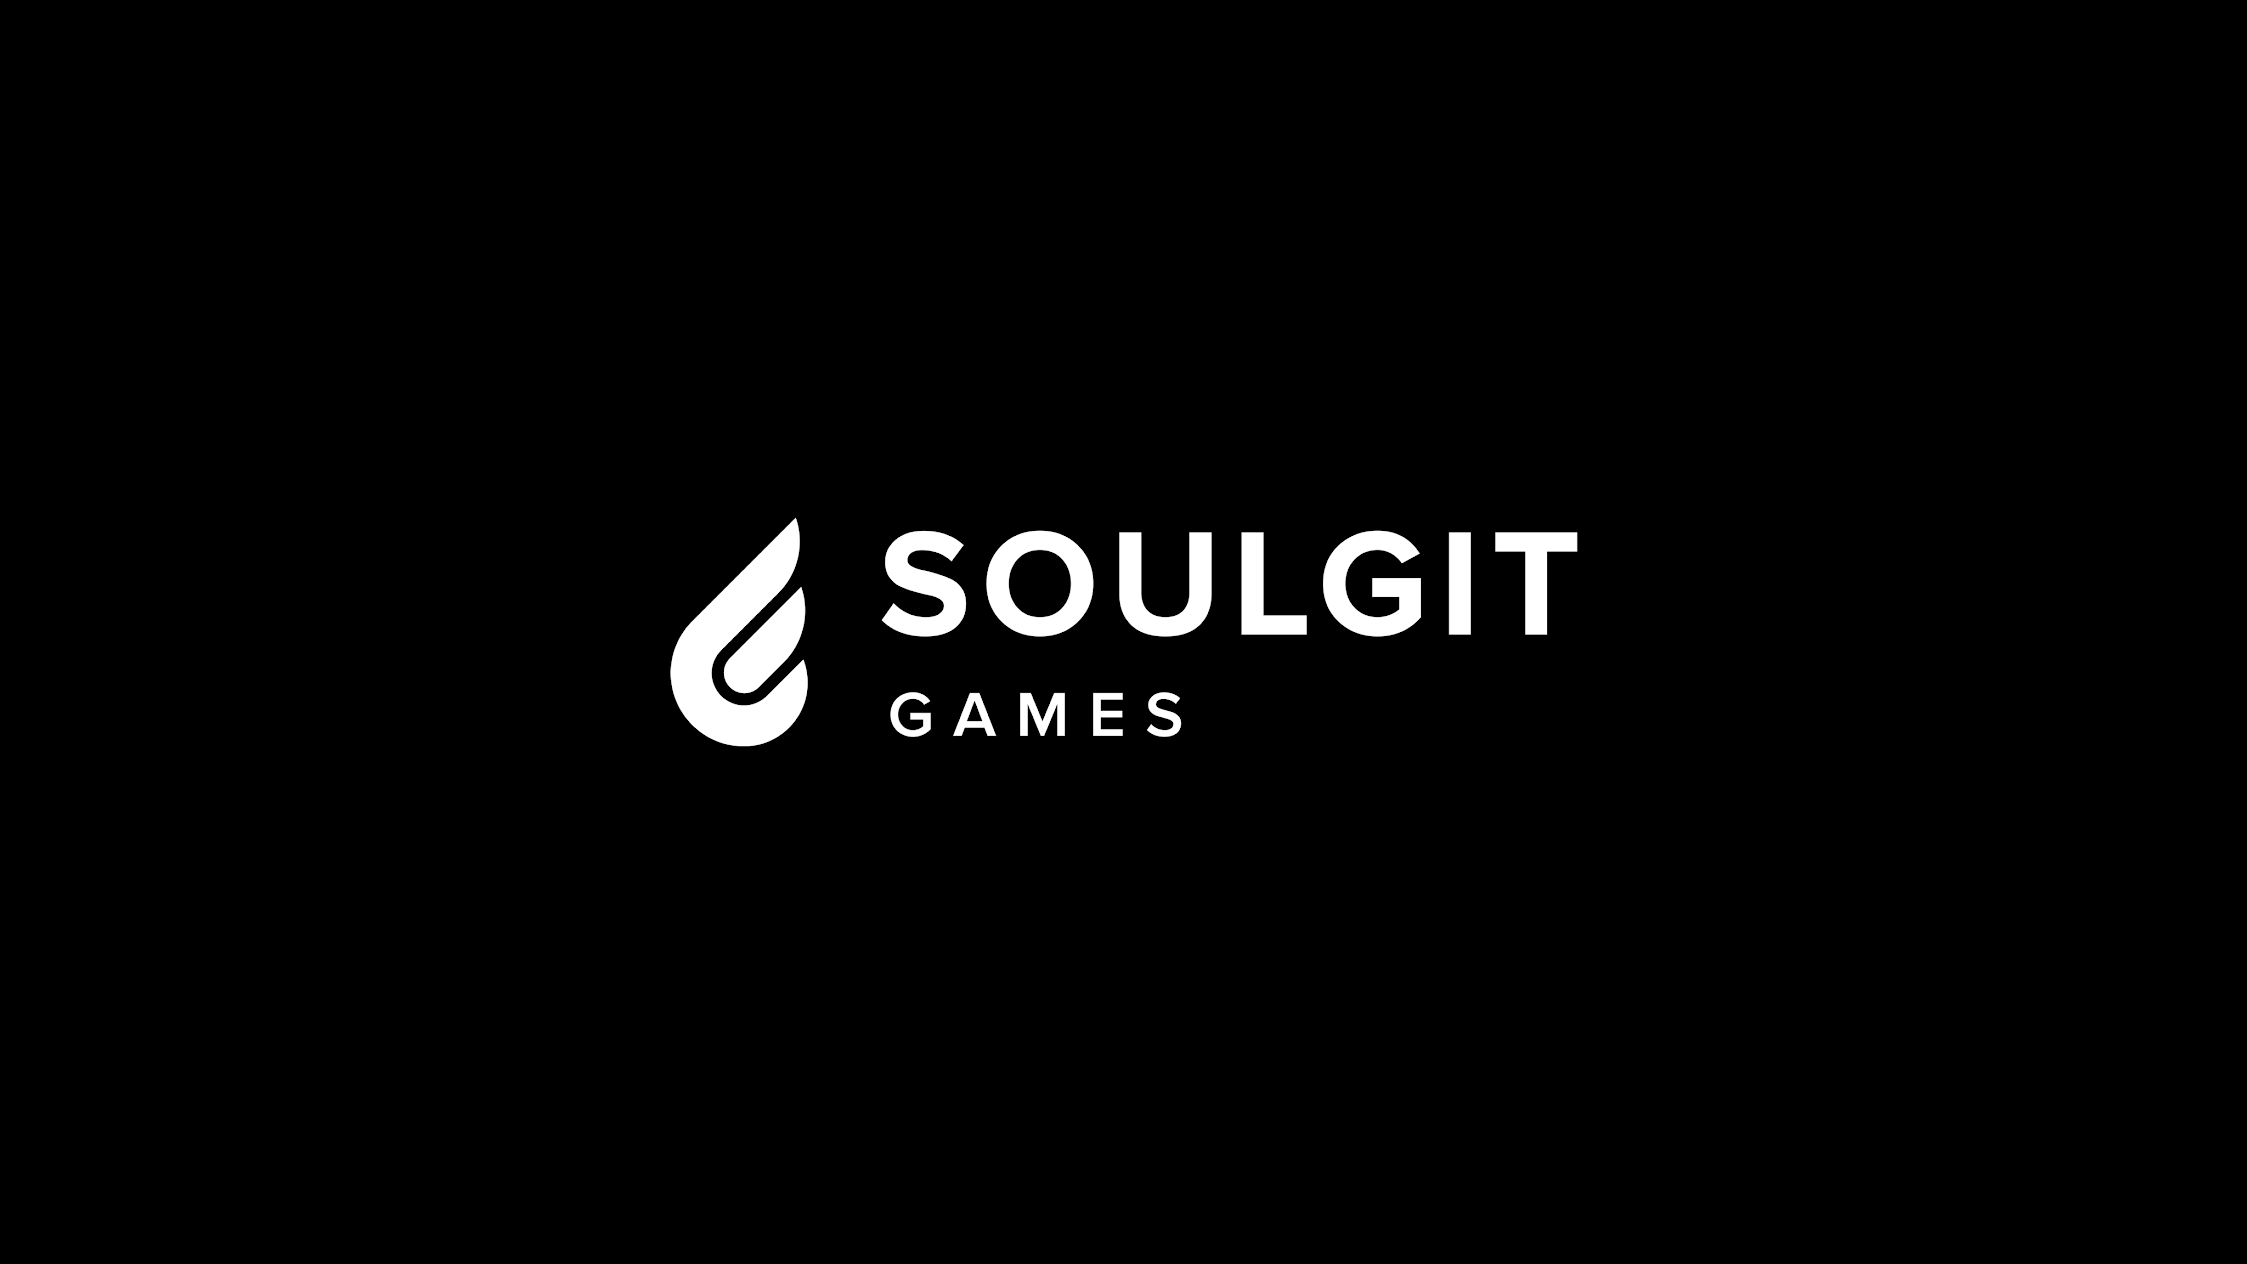 Soulgit Games